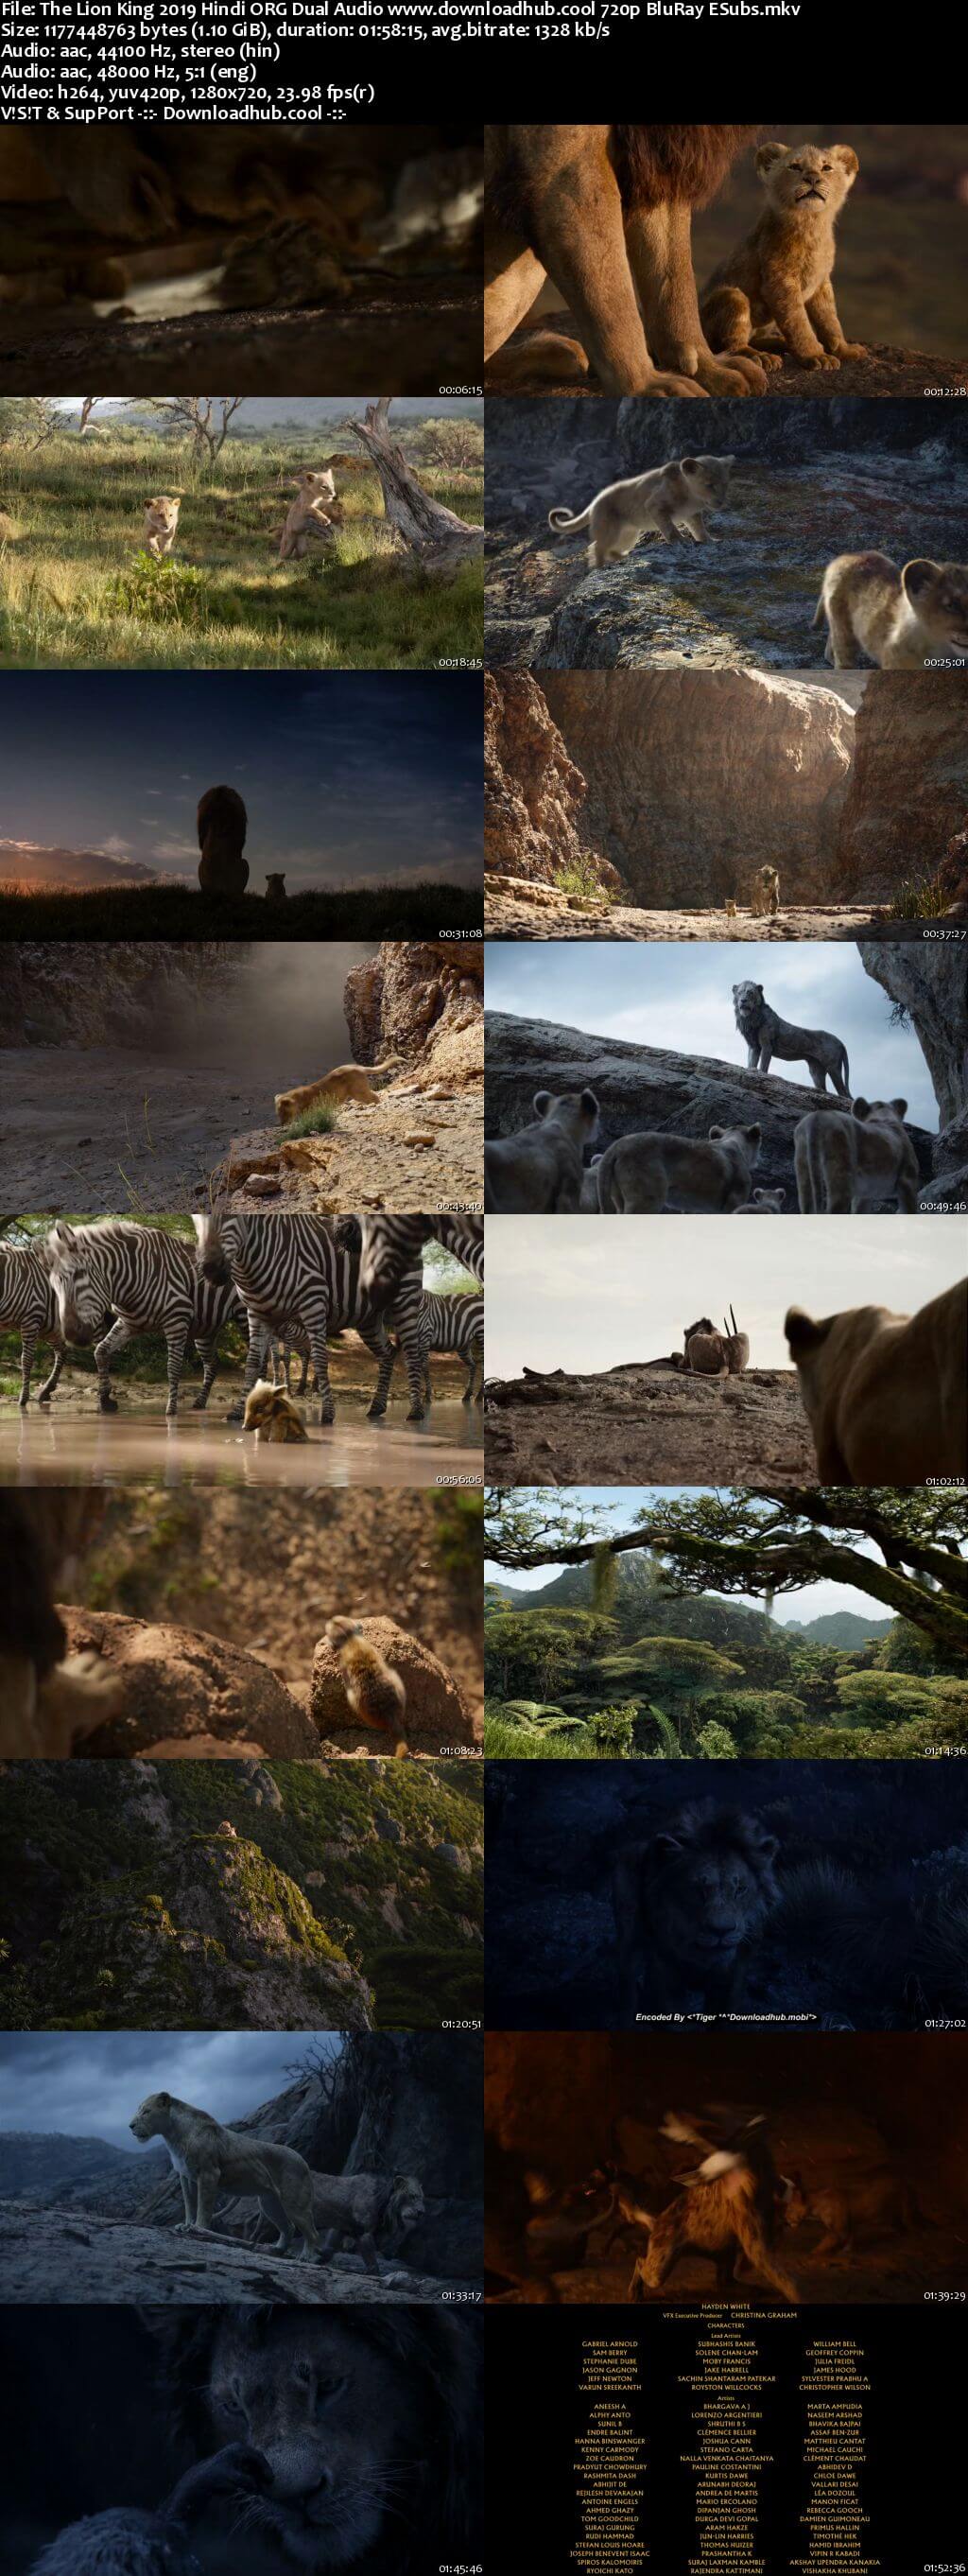 The Lion King 2019 Hindi ORG Dual Audio 720p BluRay ESubs